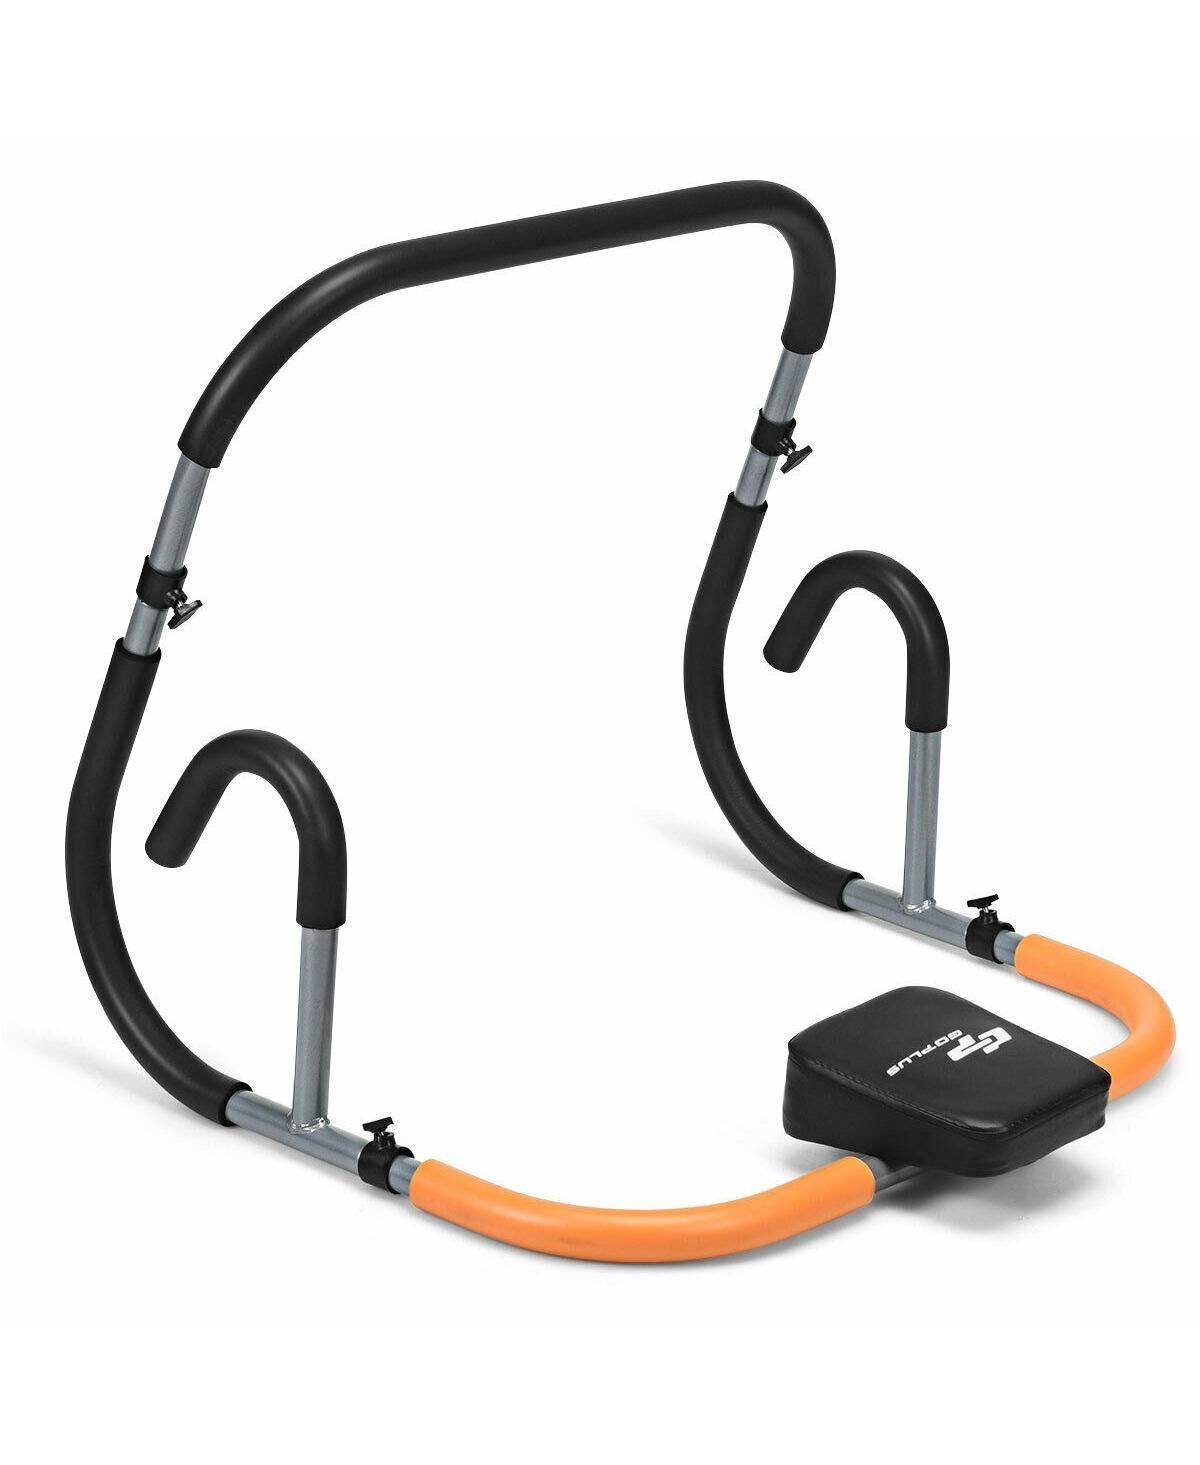 Slickblue Portable Exercise Ab Fitness Crunch for Home Gym - Black